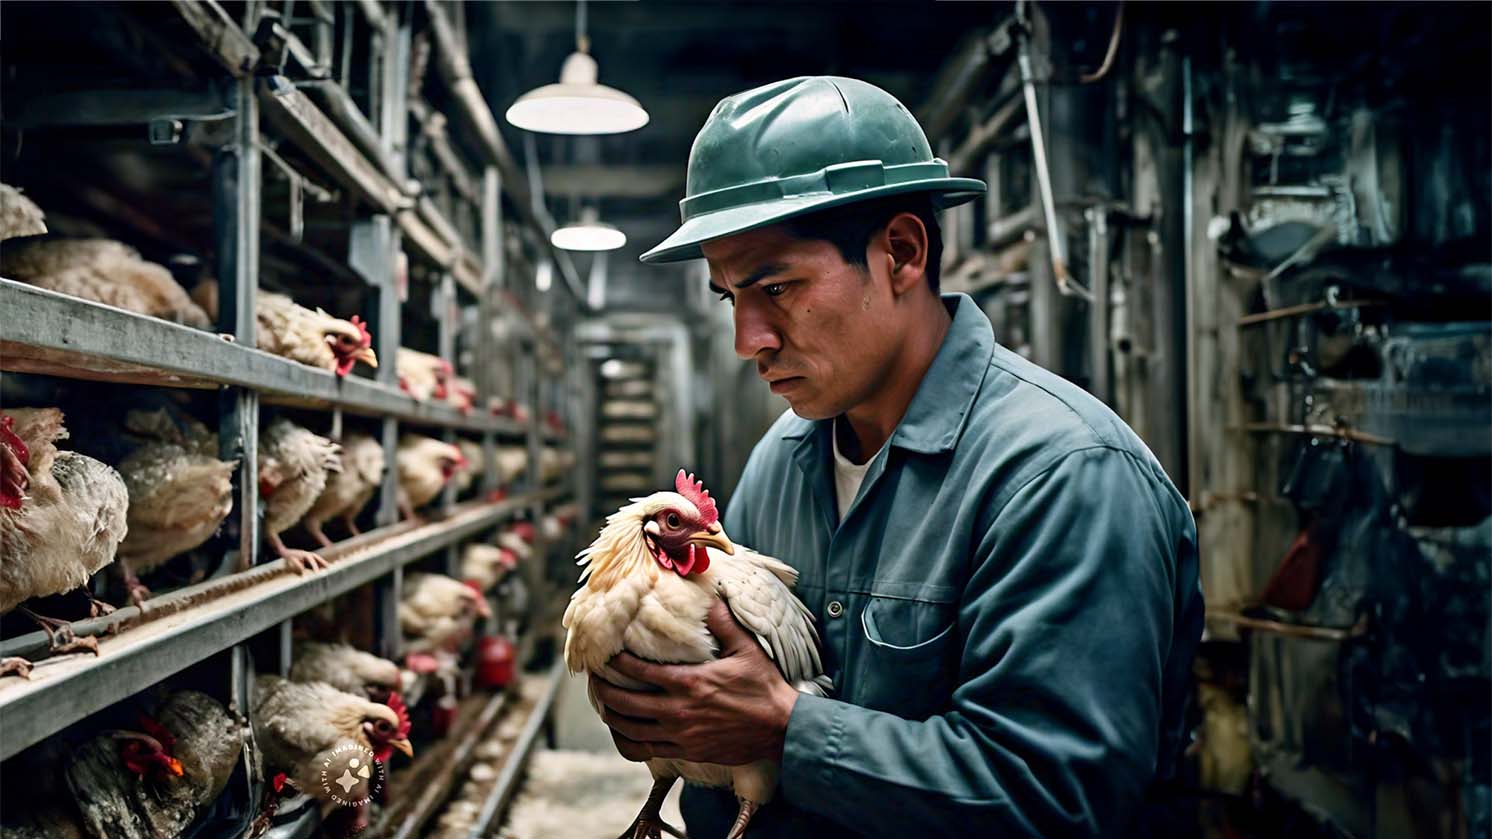 Bird Flu highlights occupational hazards faced by industrial farm workers